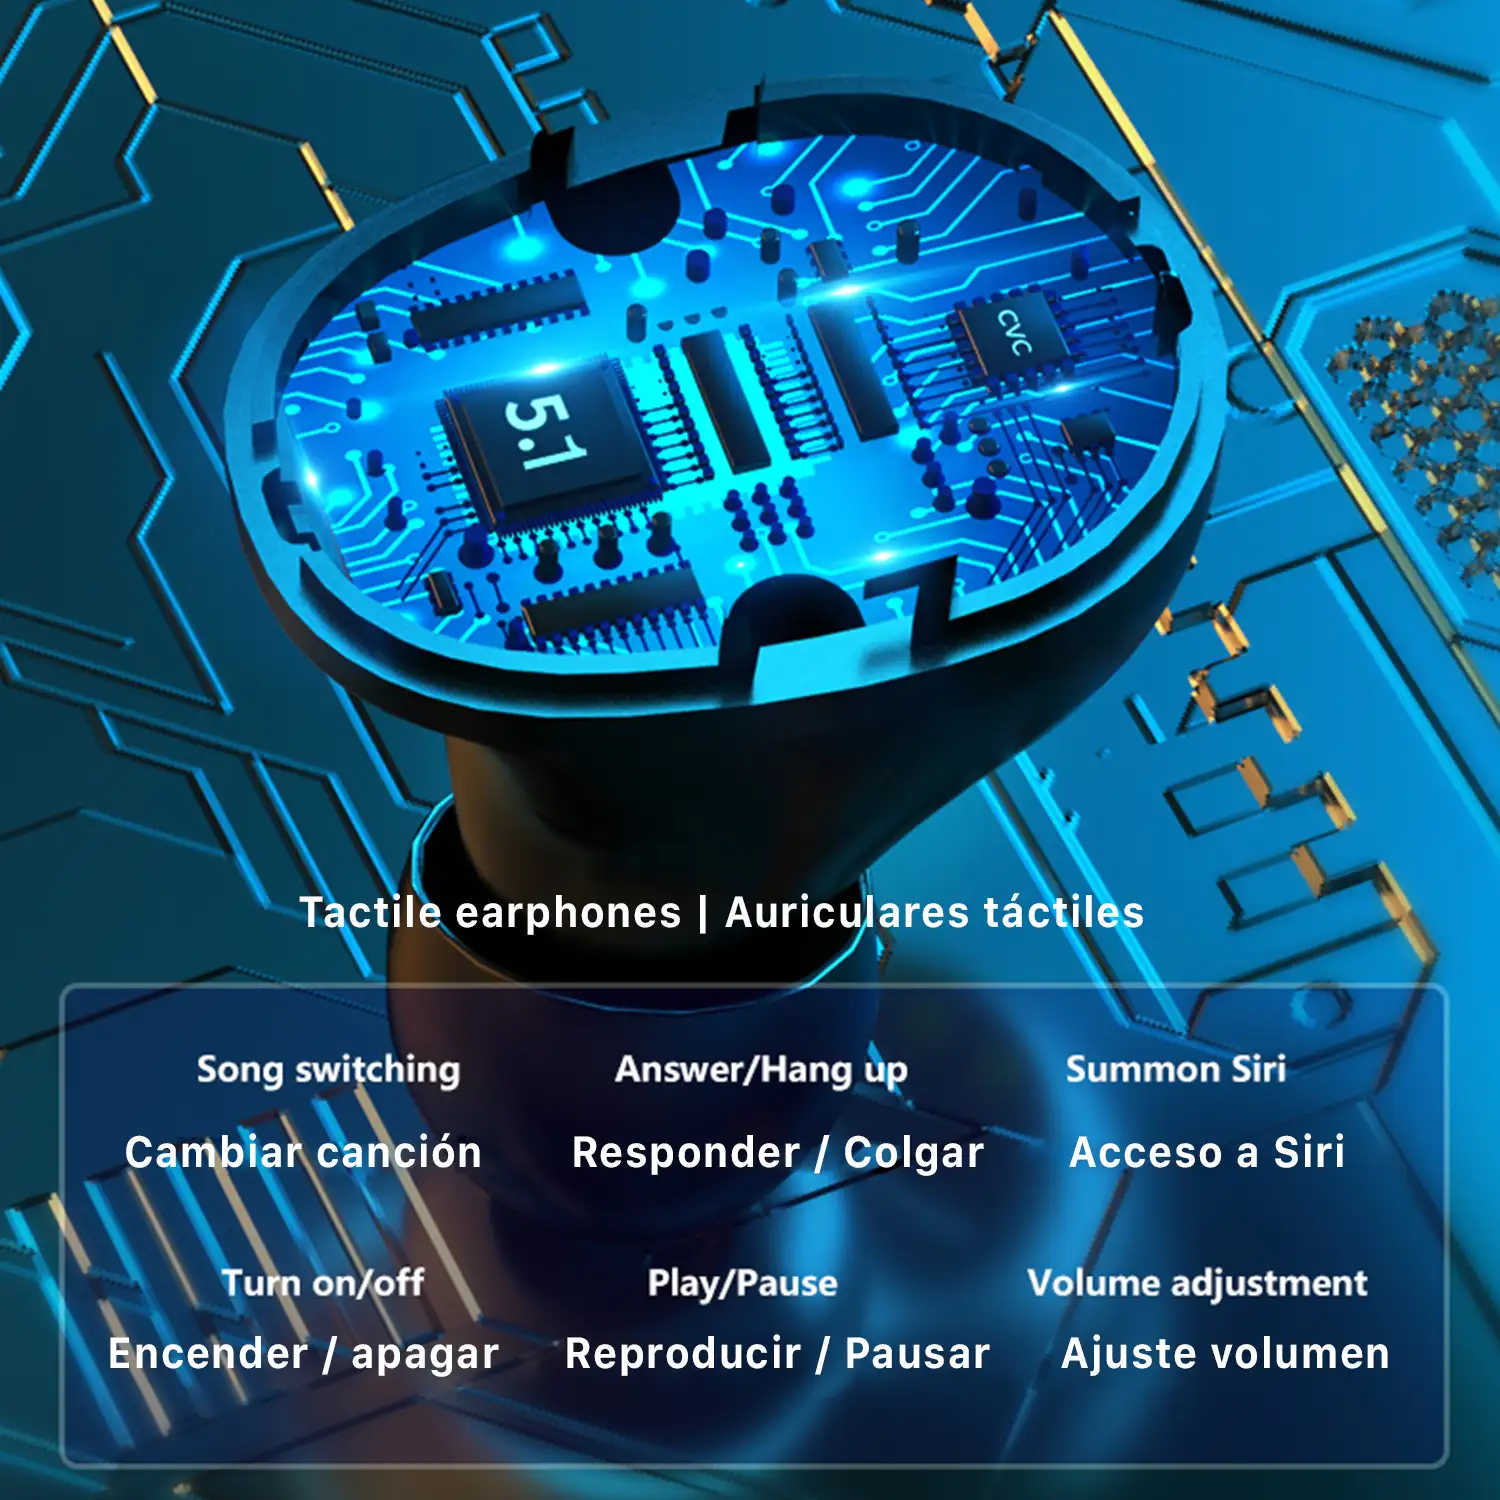 Auriculares TWS A13 Bluetooth 5.1 táctil.Base de carga powerbank con indicador de carga y reloj digital.